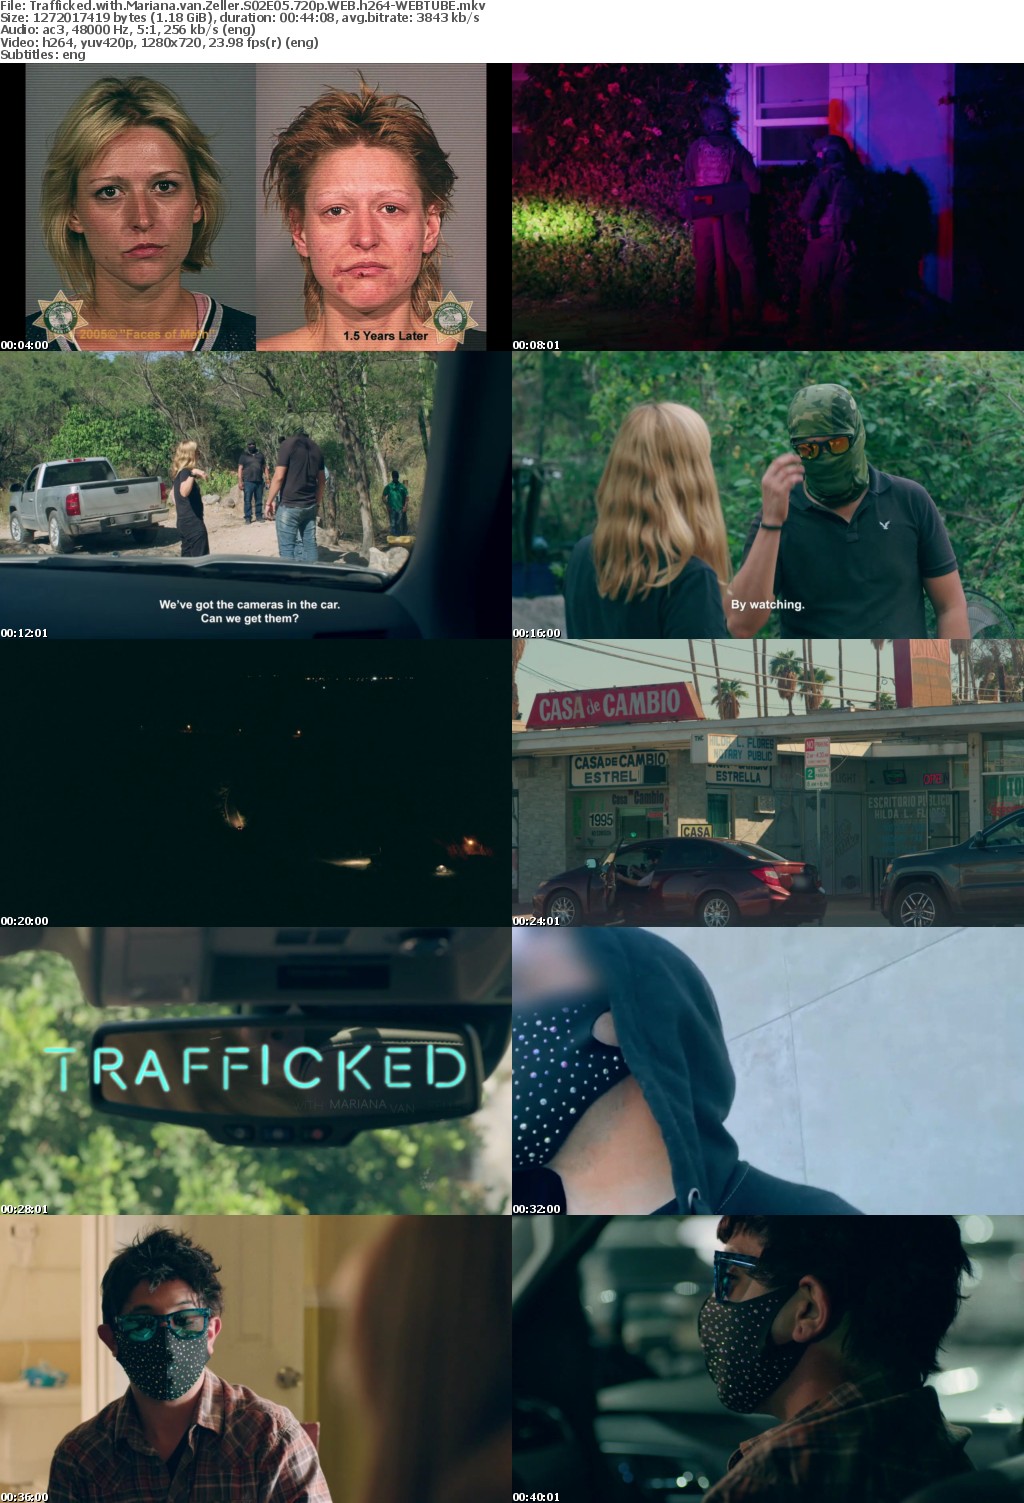 Trafficked with Mariana van Zeller S02E05 720p WEB h264-WEBTUBE